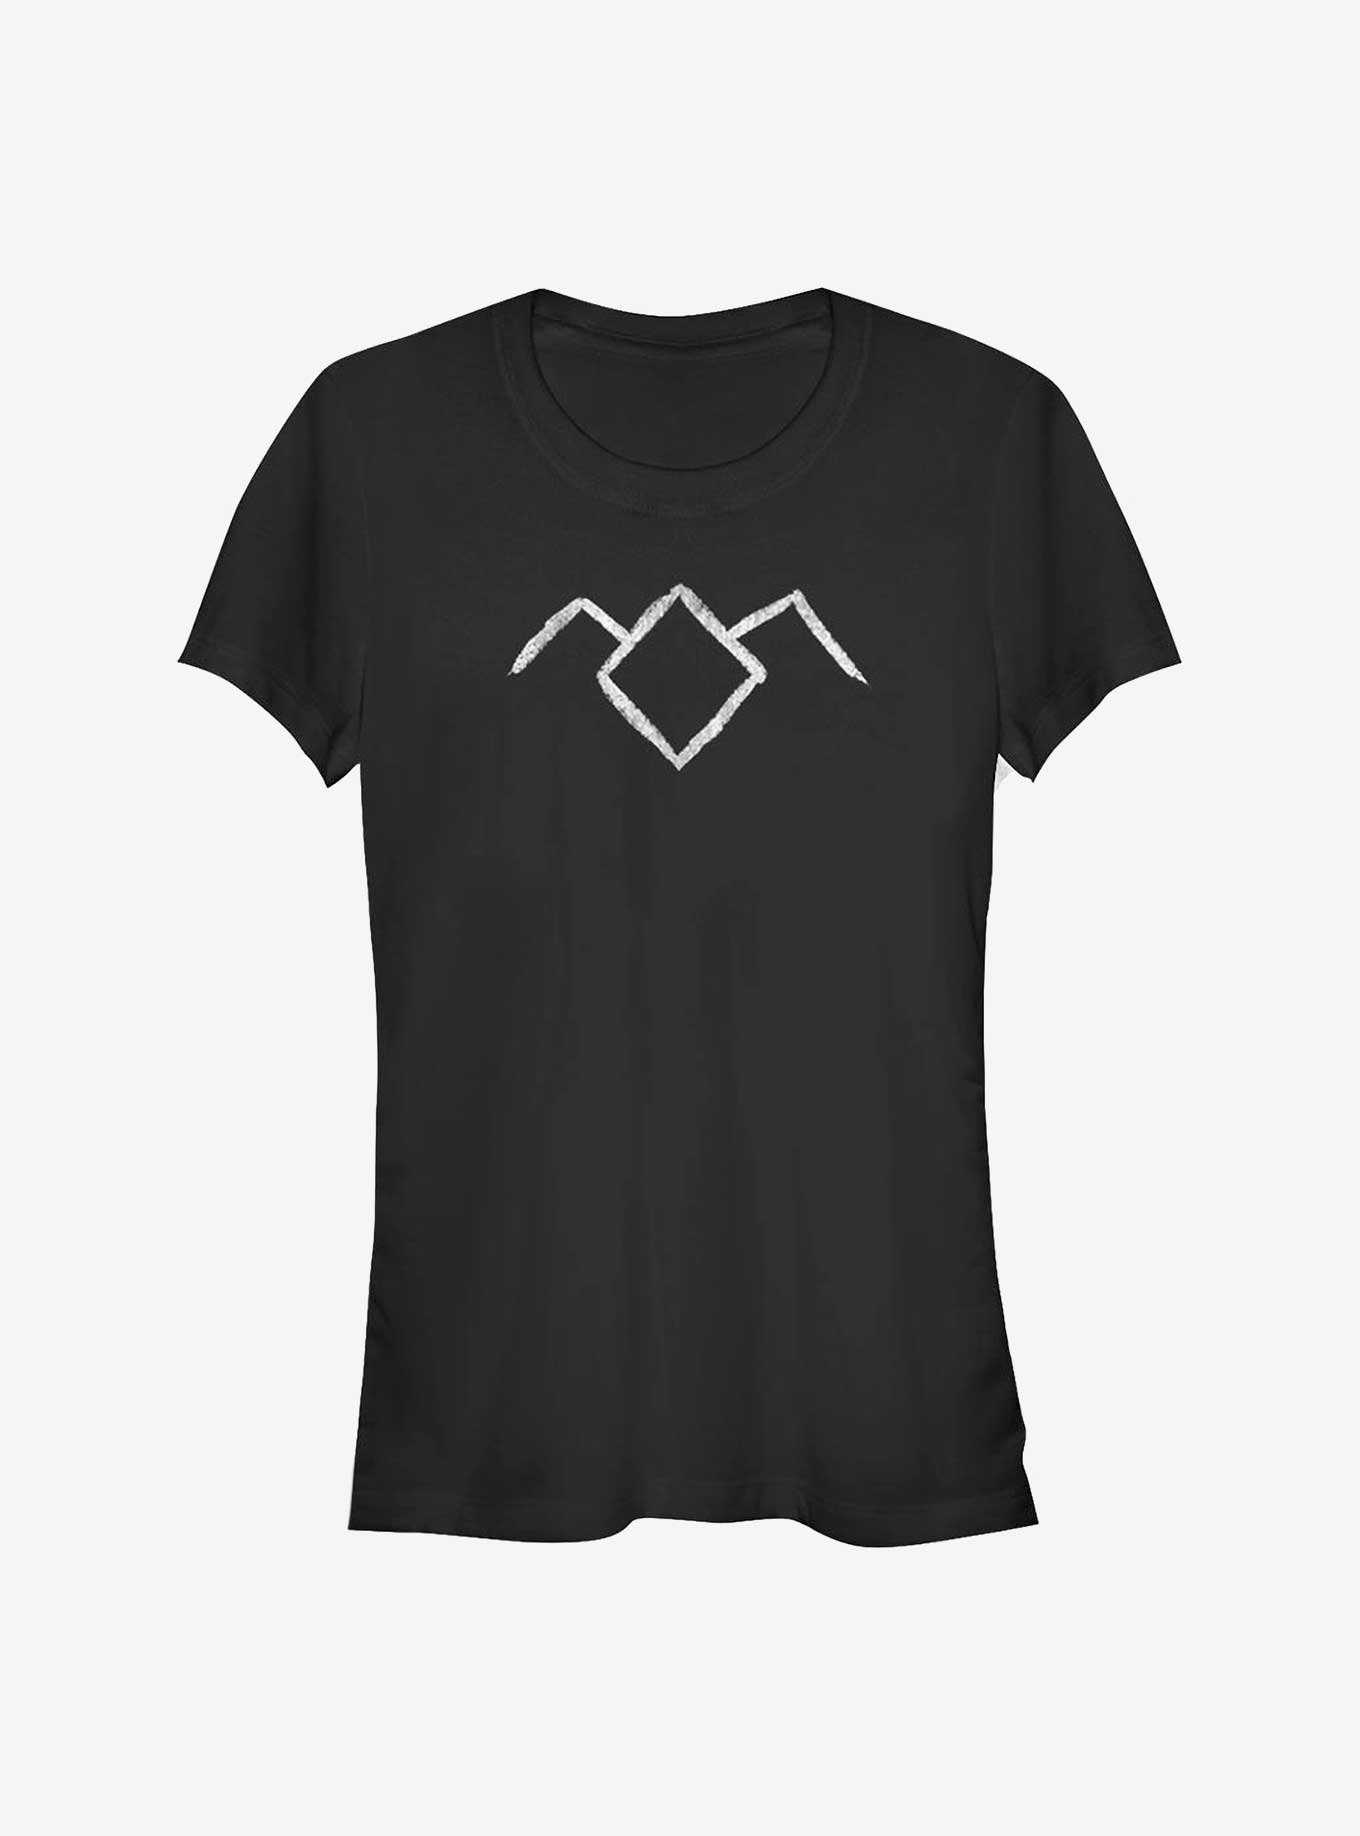 Twin Peaks Symbols Girls T-Shirt, BLACK, hi-res